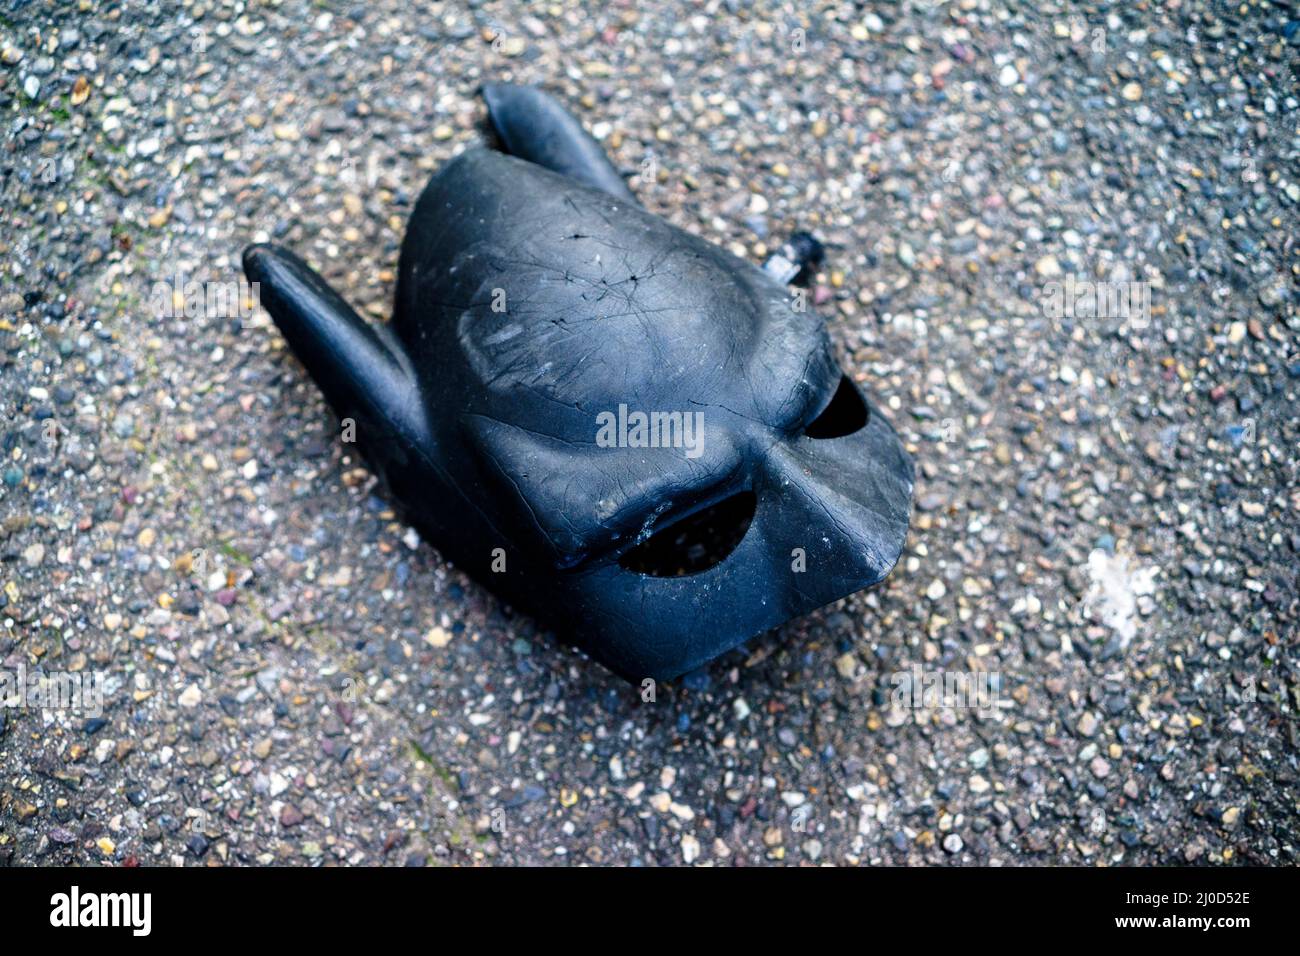 Batman mask on a concrete floor Stock Photo